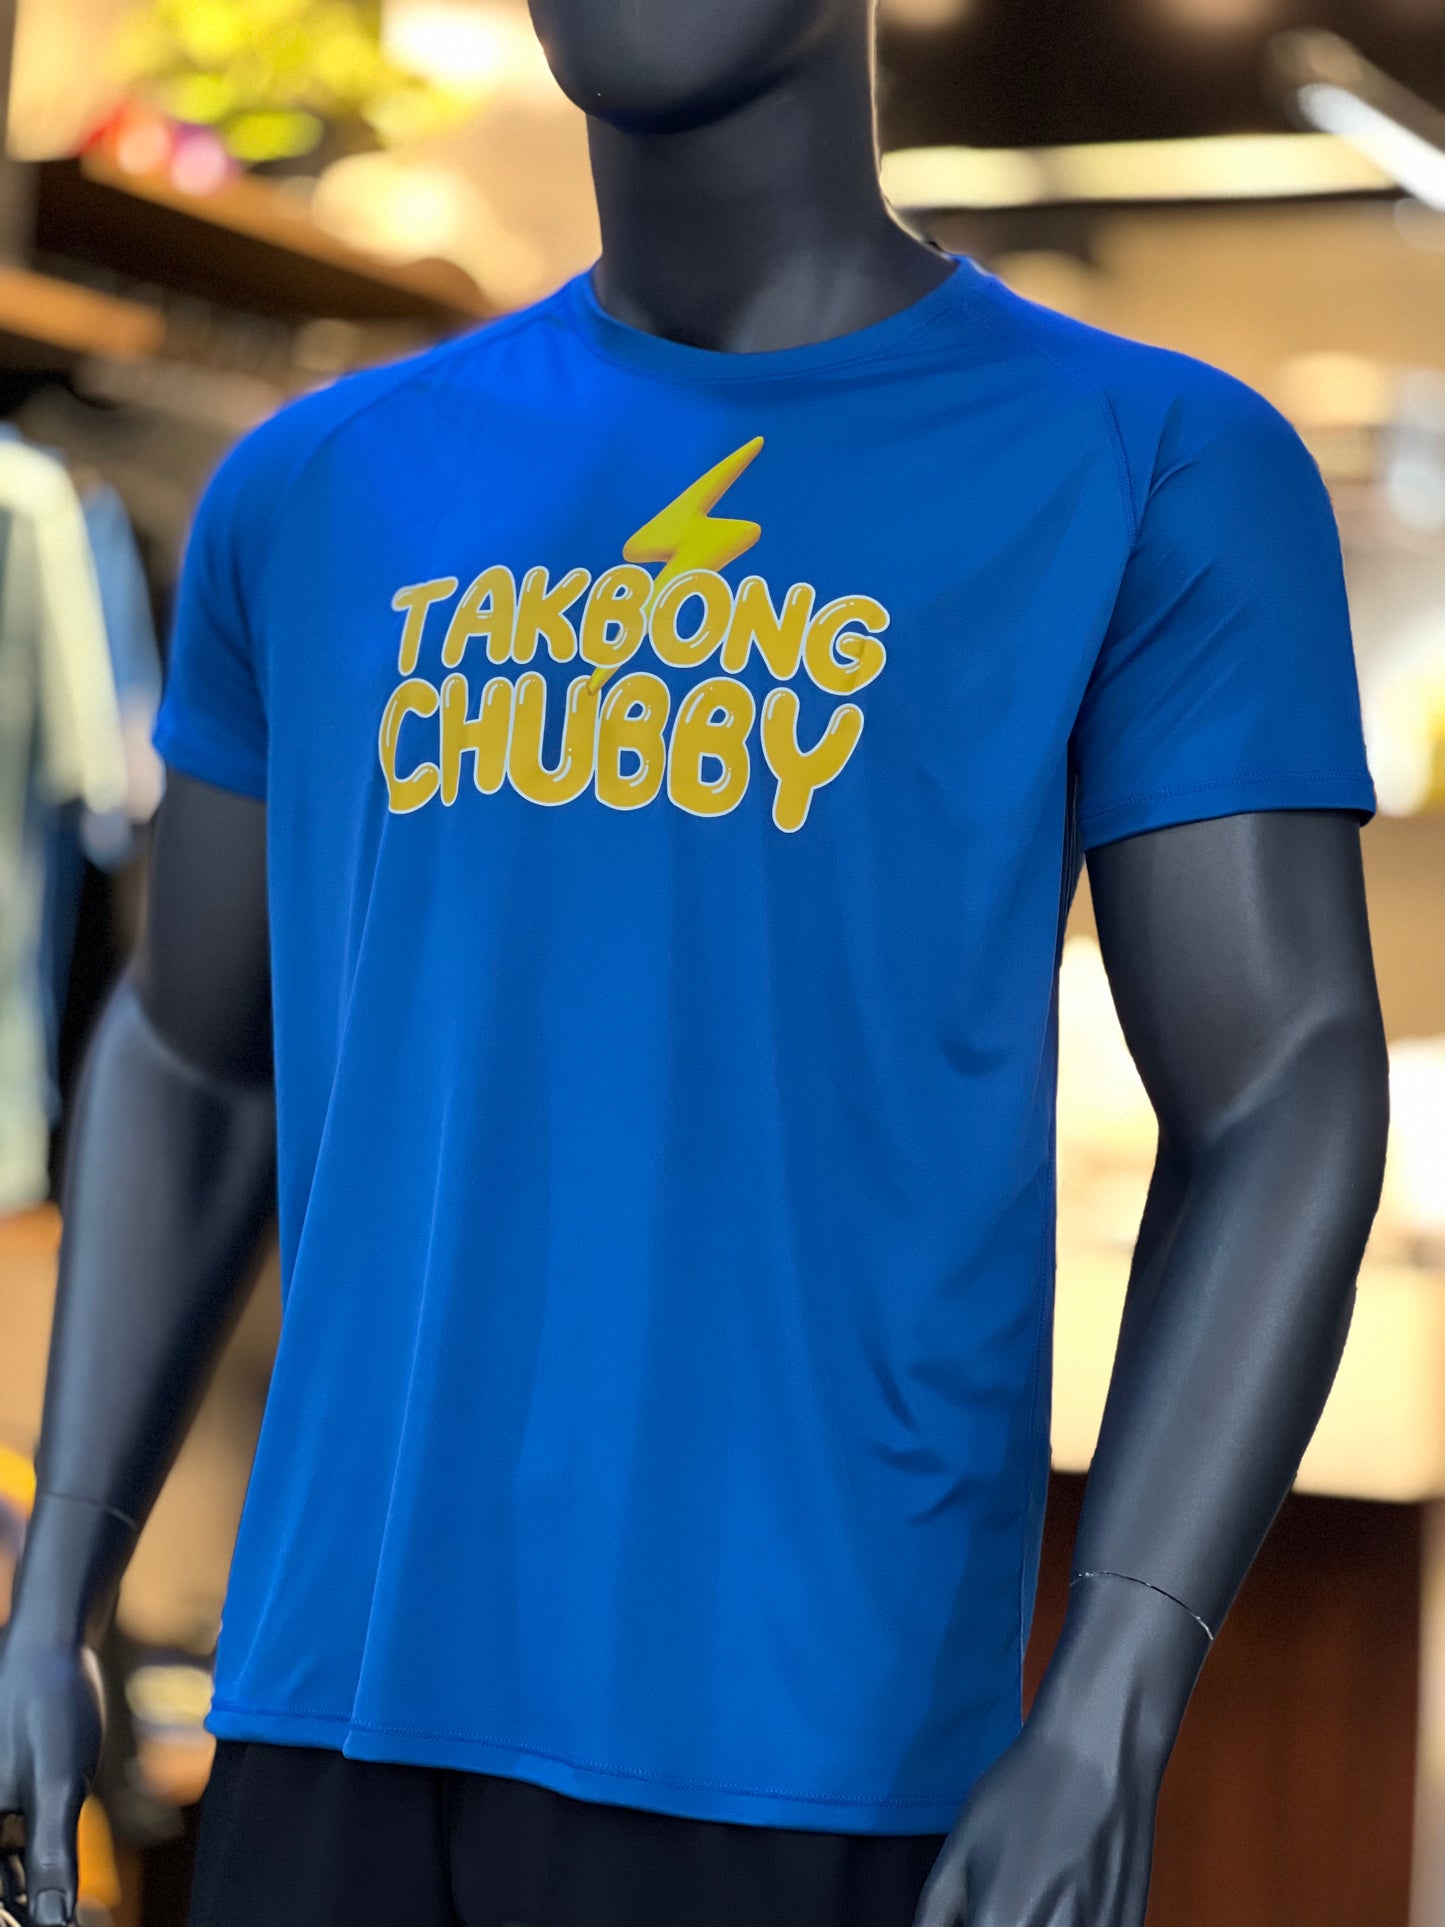 Takbong Chubby Men’s